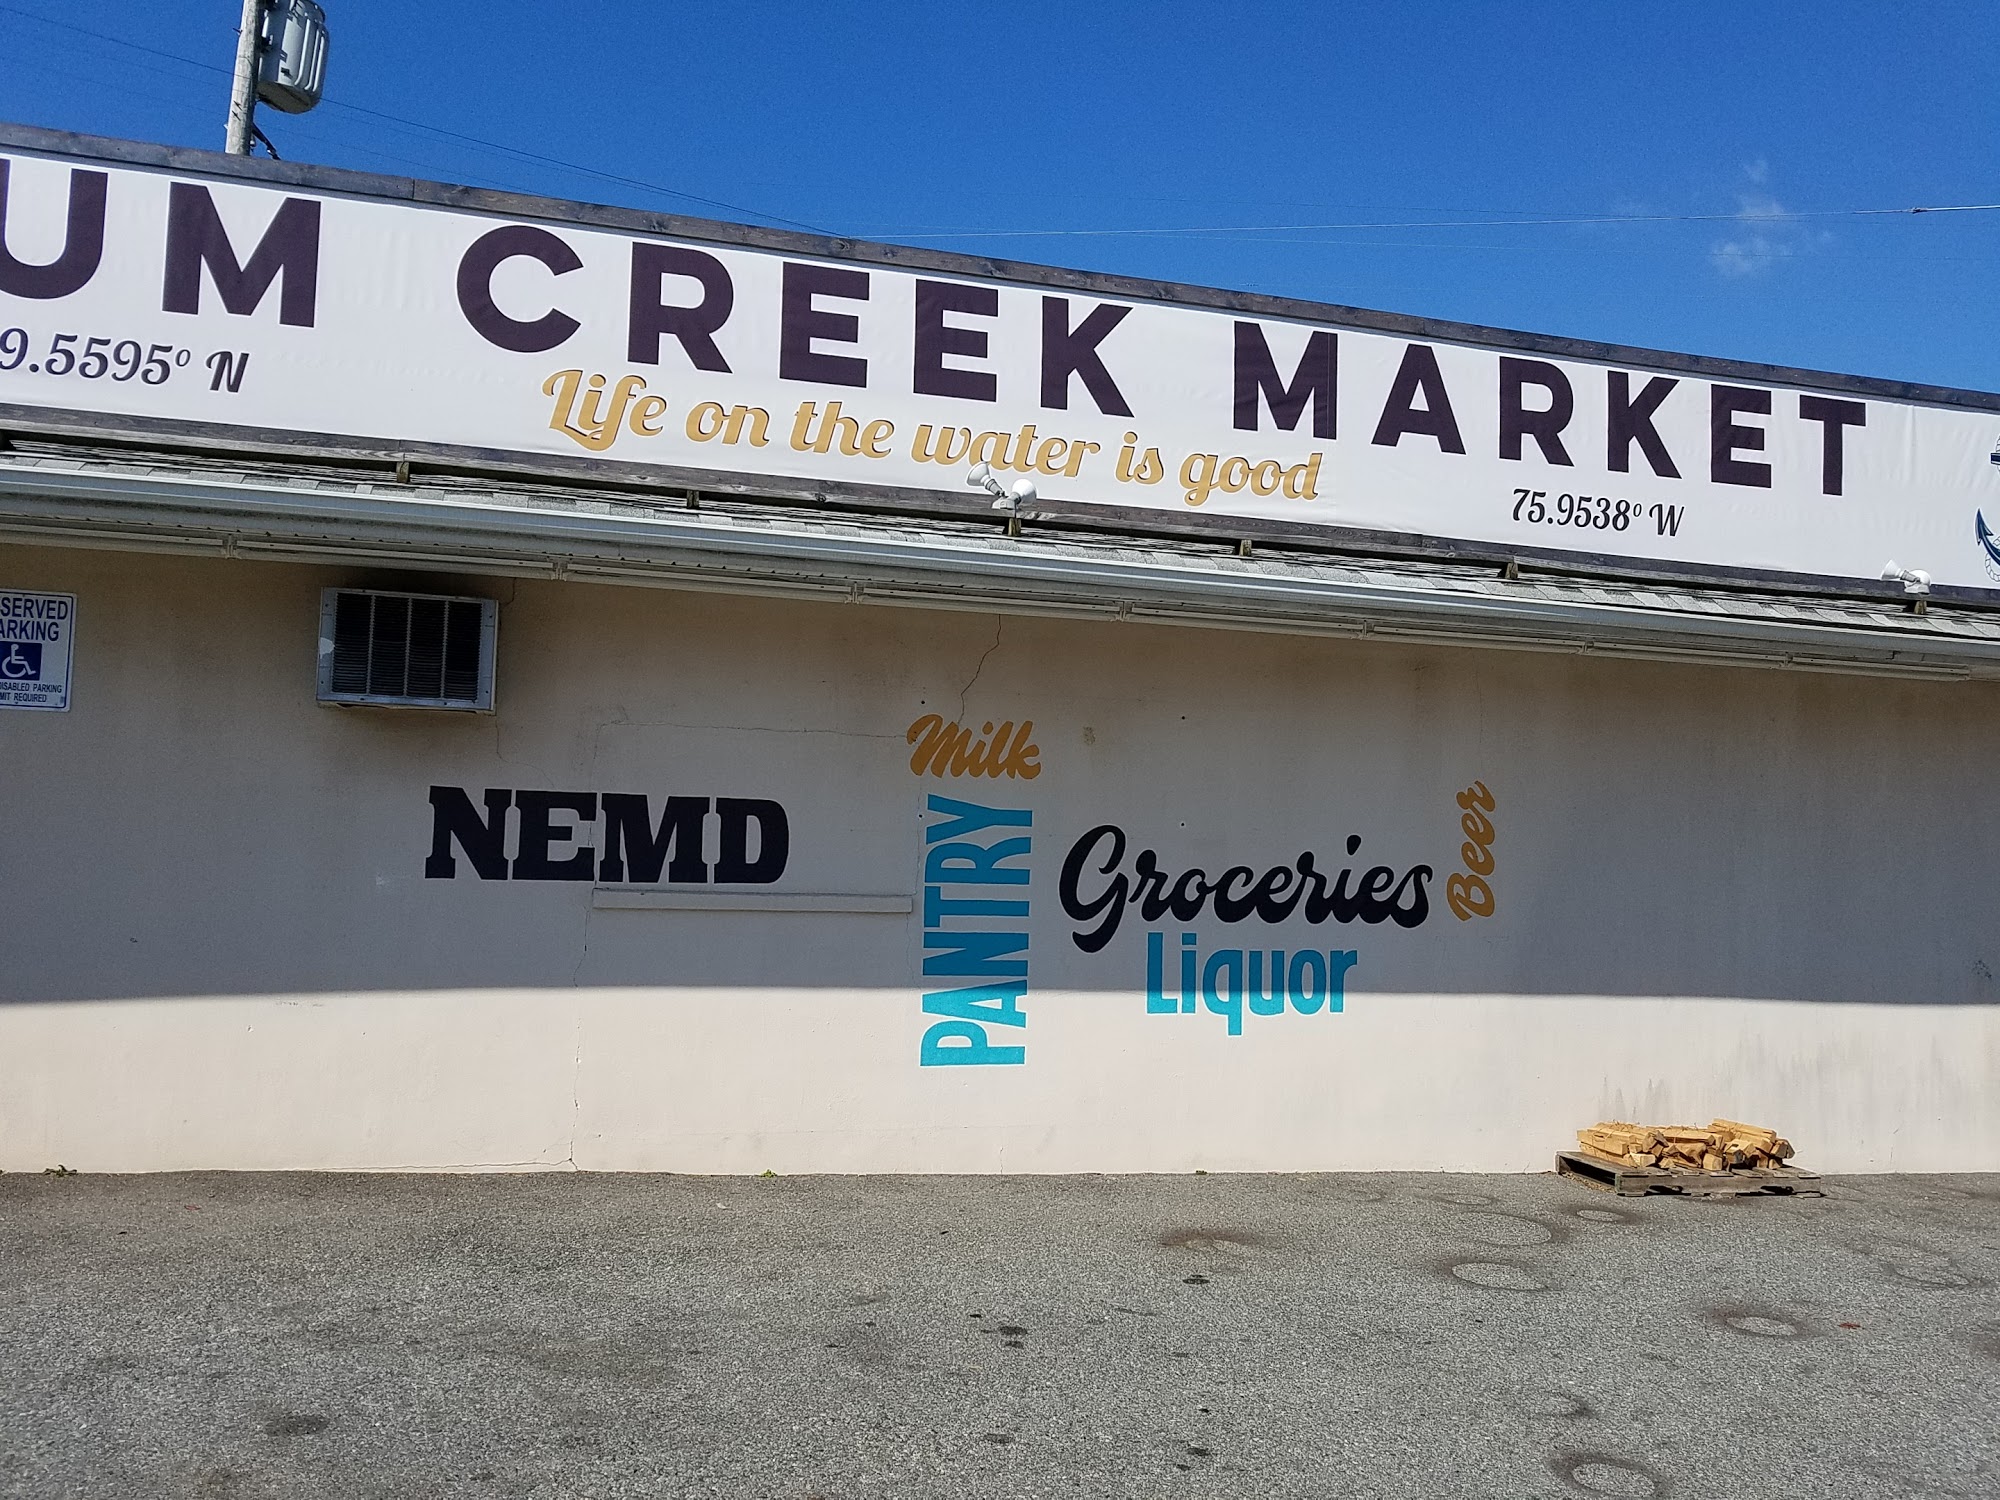 The Plum Creek Market